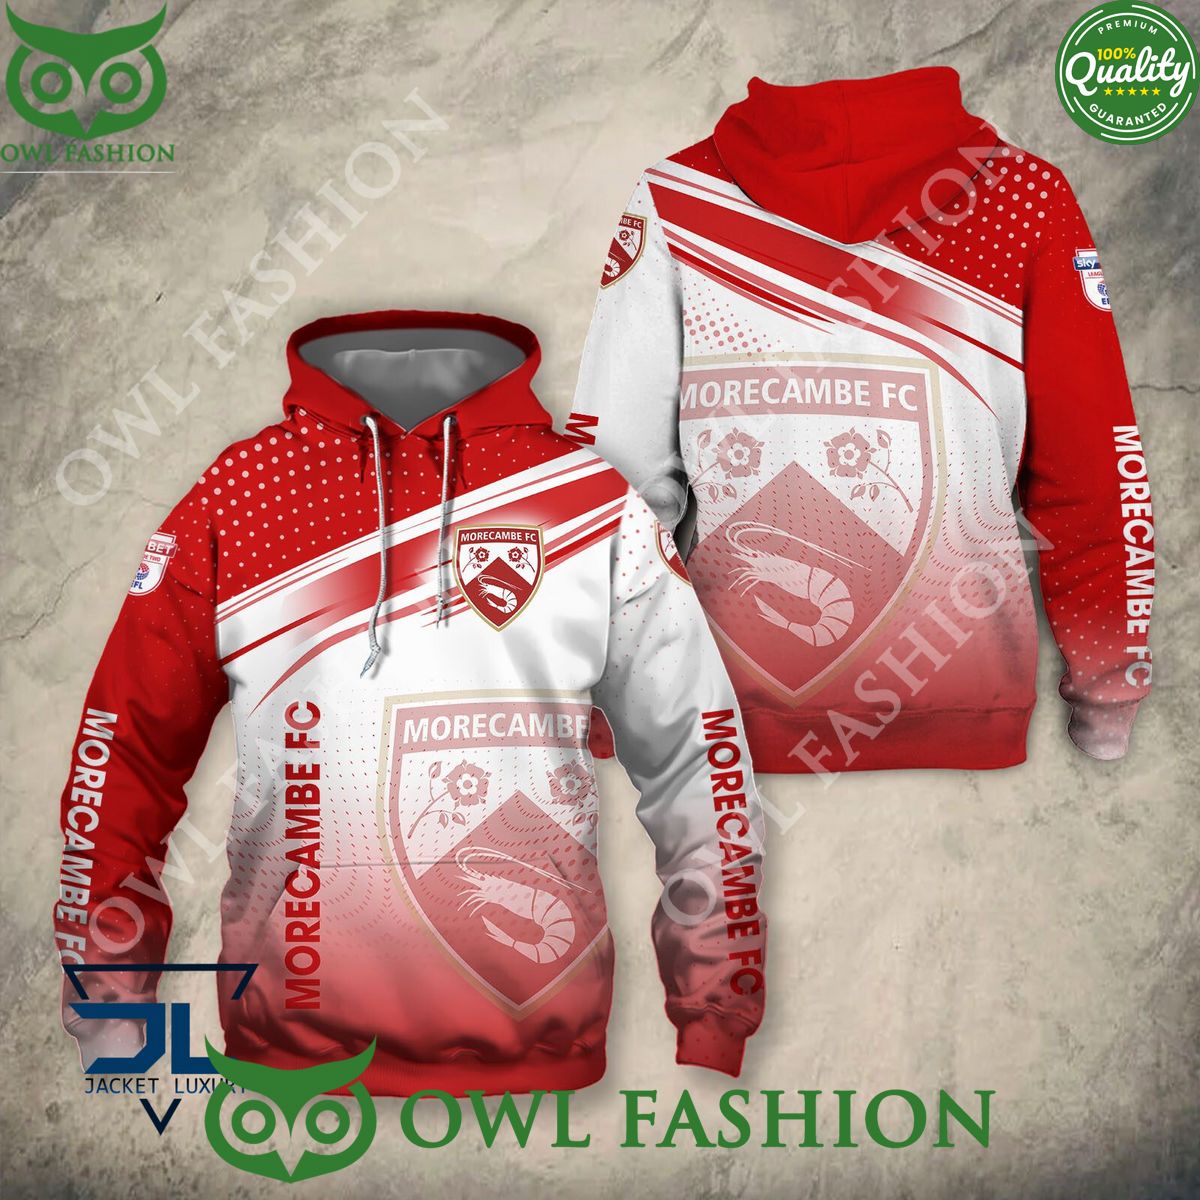 morecambe f c trending design league two hoodie shirt 3 WaLev.jpg